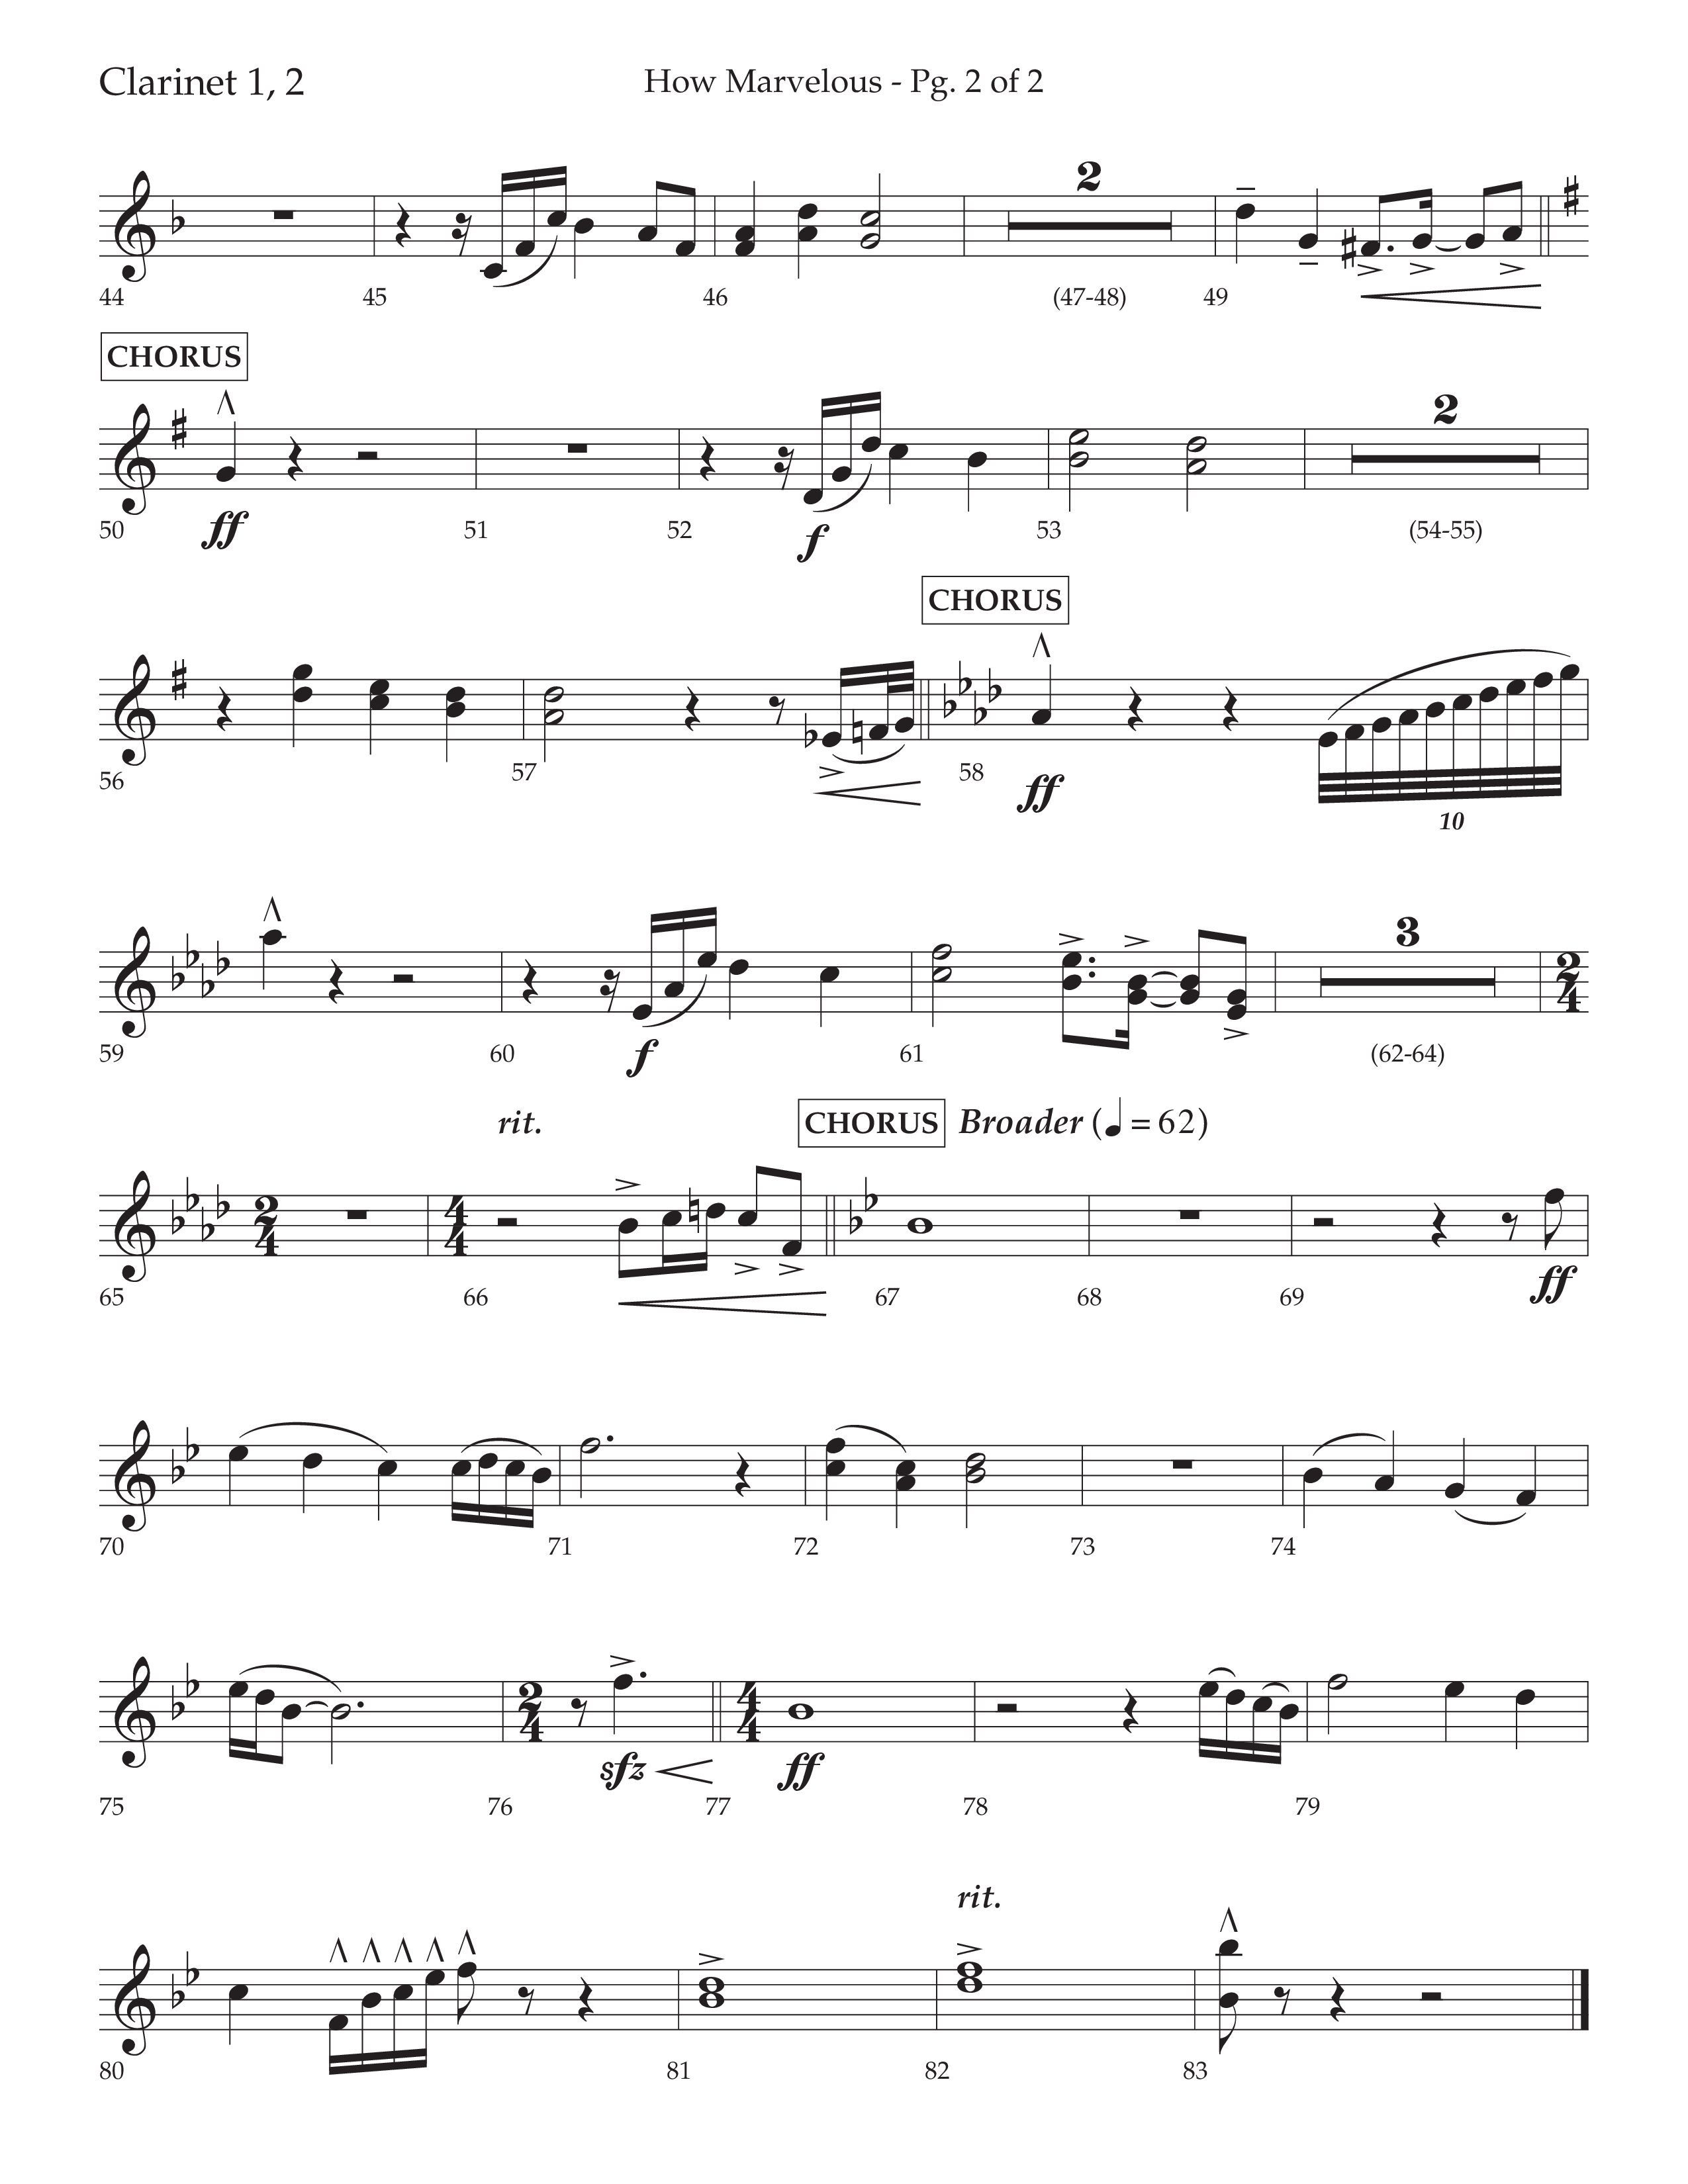 How Marvelous Medley (Choral Anthem SATB) Clarinet 1/2 (Lifeway Choral / Arr. David Wise / Orch. Cliff Duren)